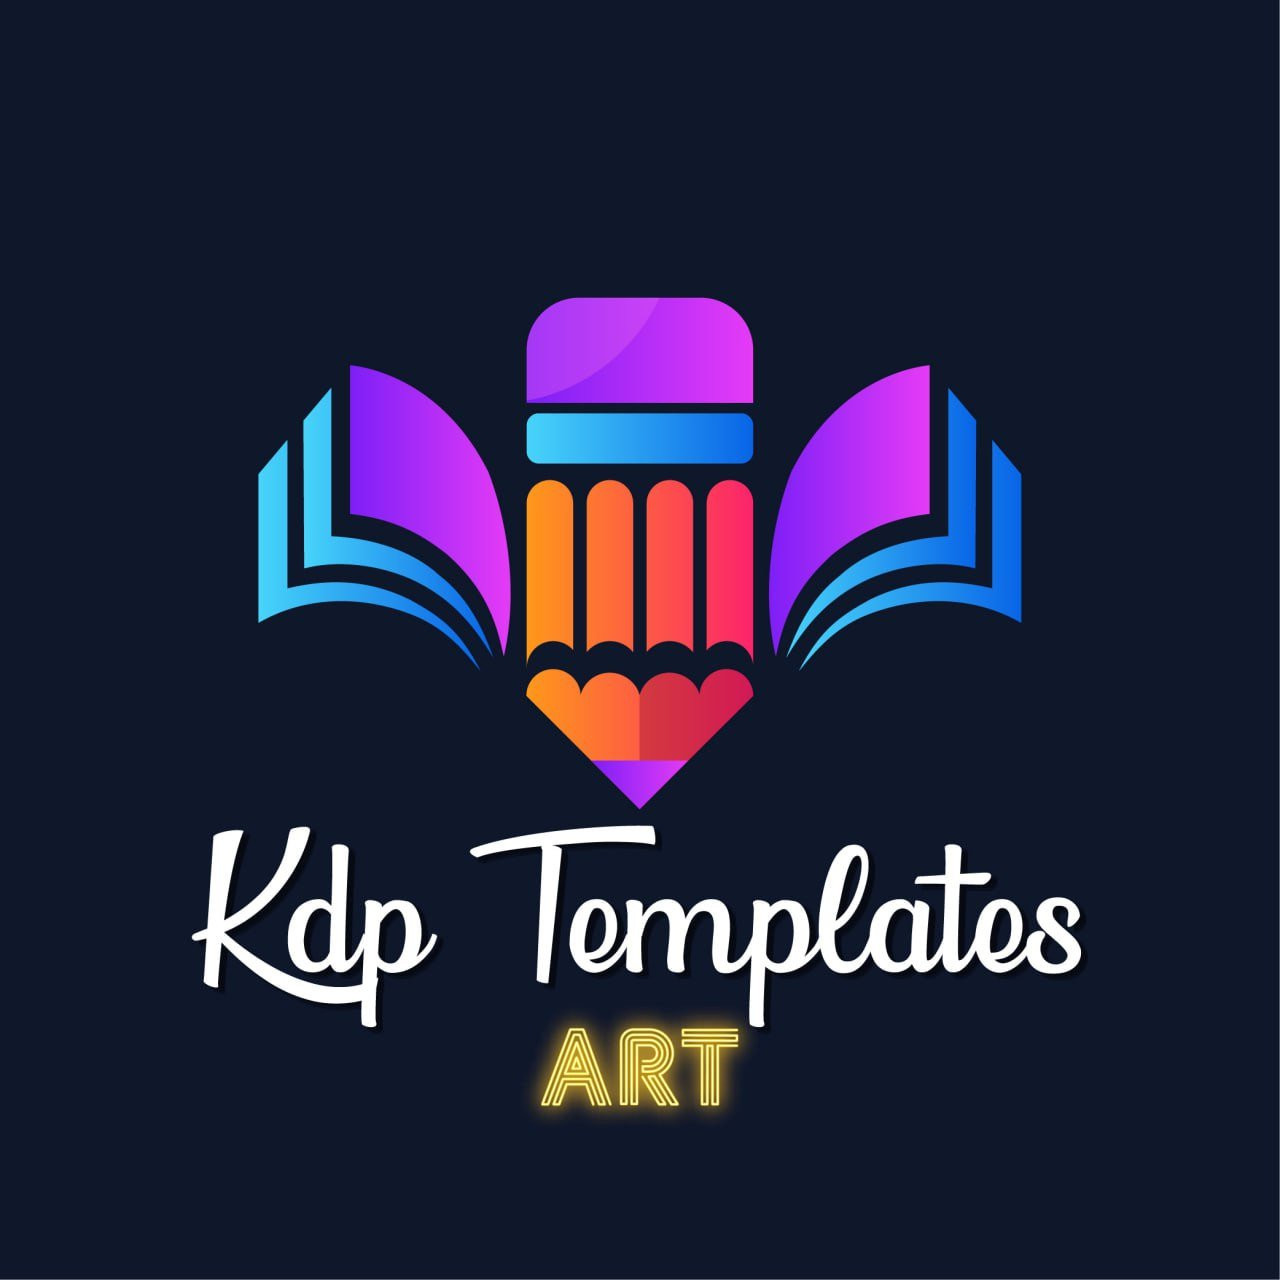 KDP TEMPLATES ART's profile picture